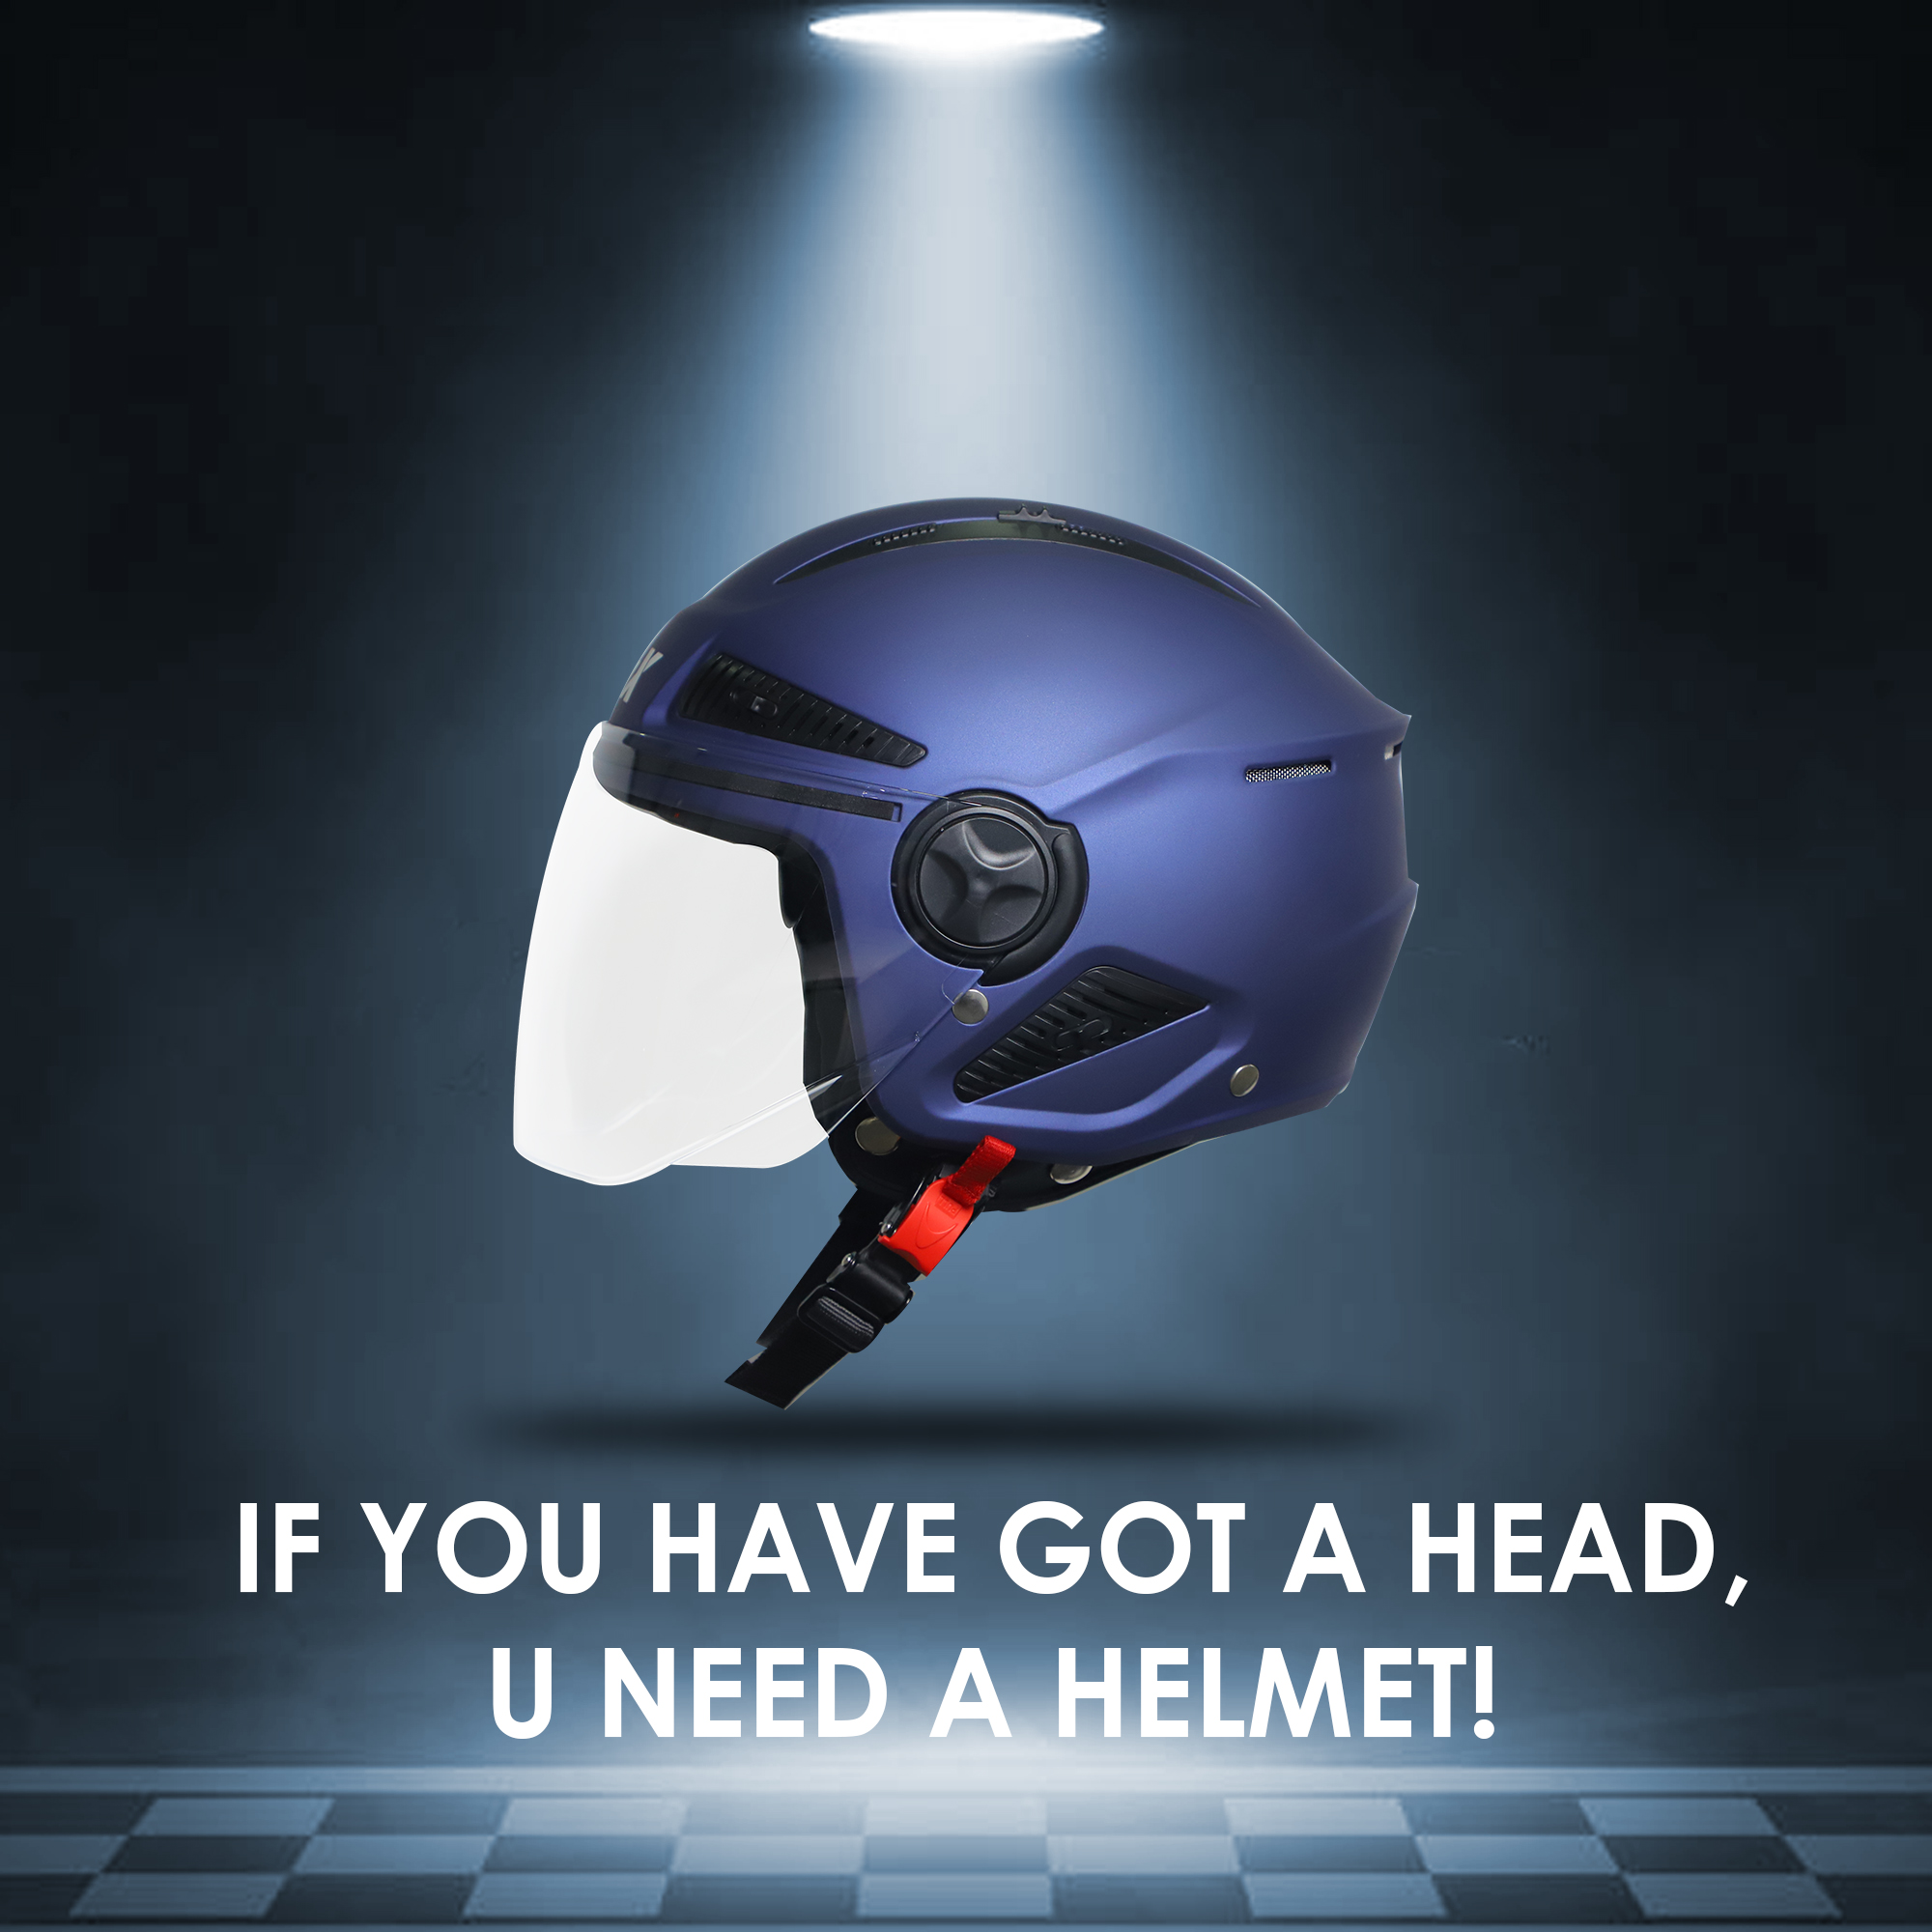 Steelbird SBH-24 Boxx ISI Certified Open Face Helmet For Men And Women (Matt H. Blue With Clear Visor)